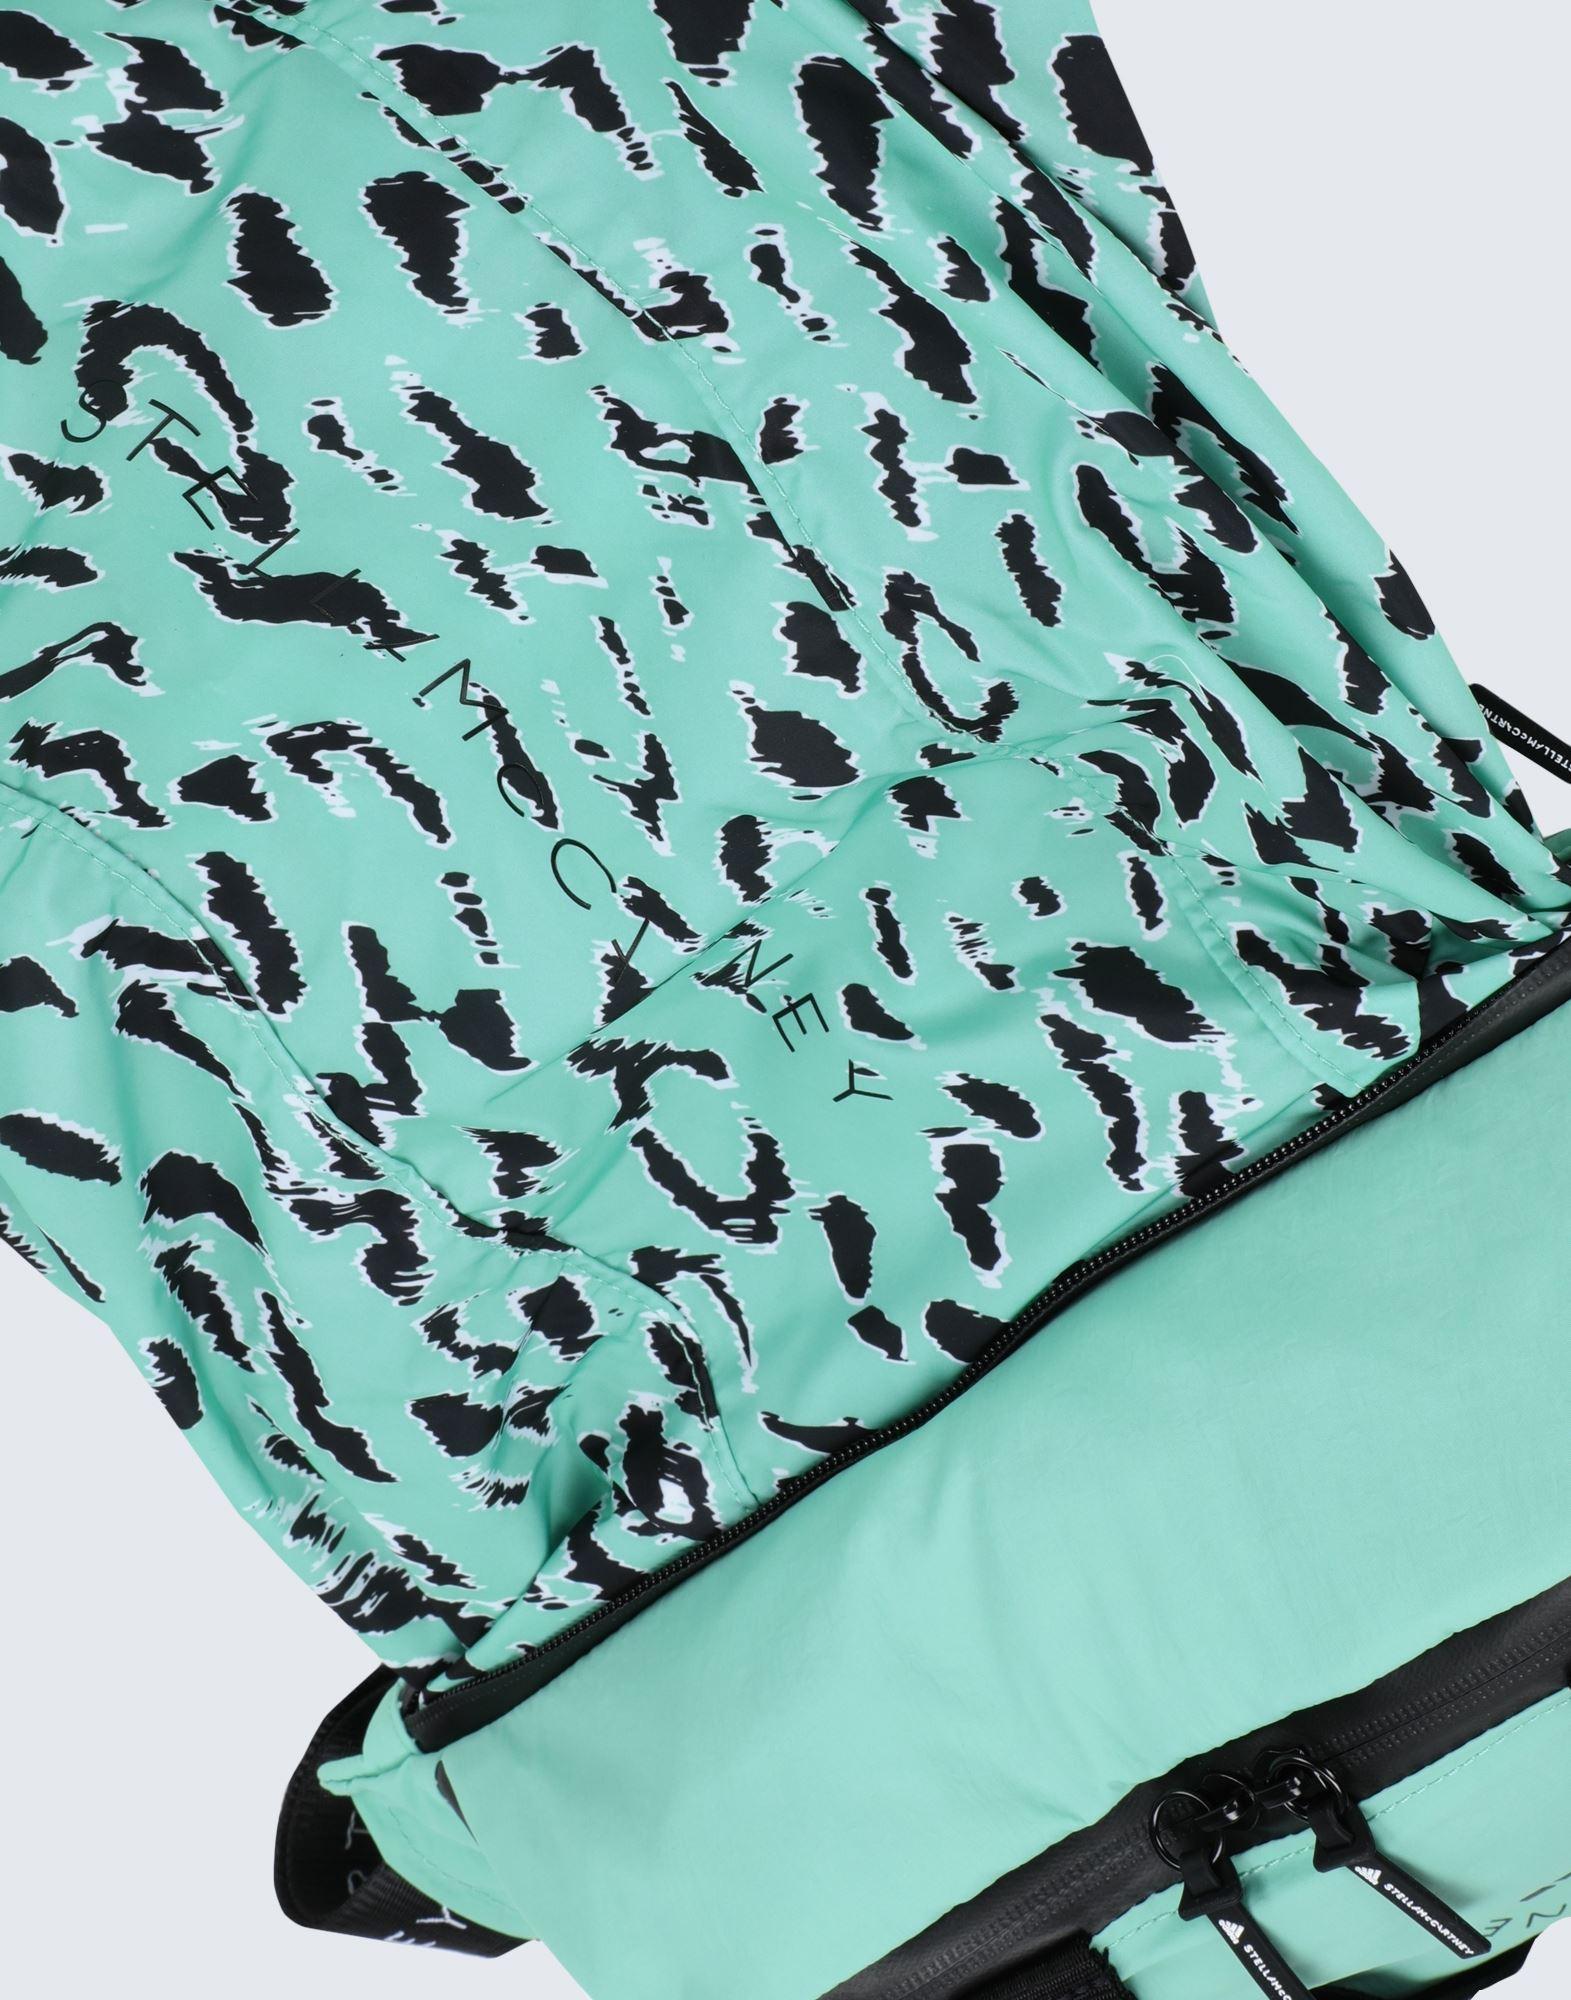 Adidas By Stella Mccartney Convertible Bumbag - Multi/Green/Semi